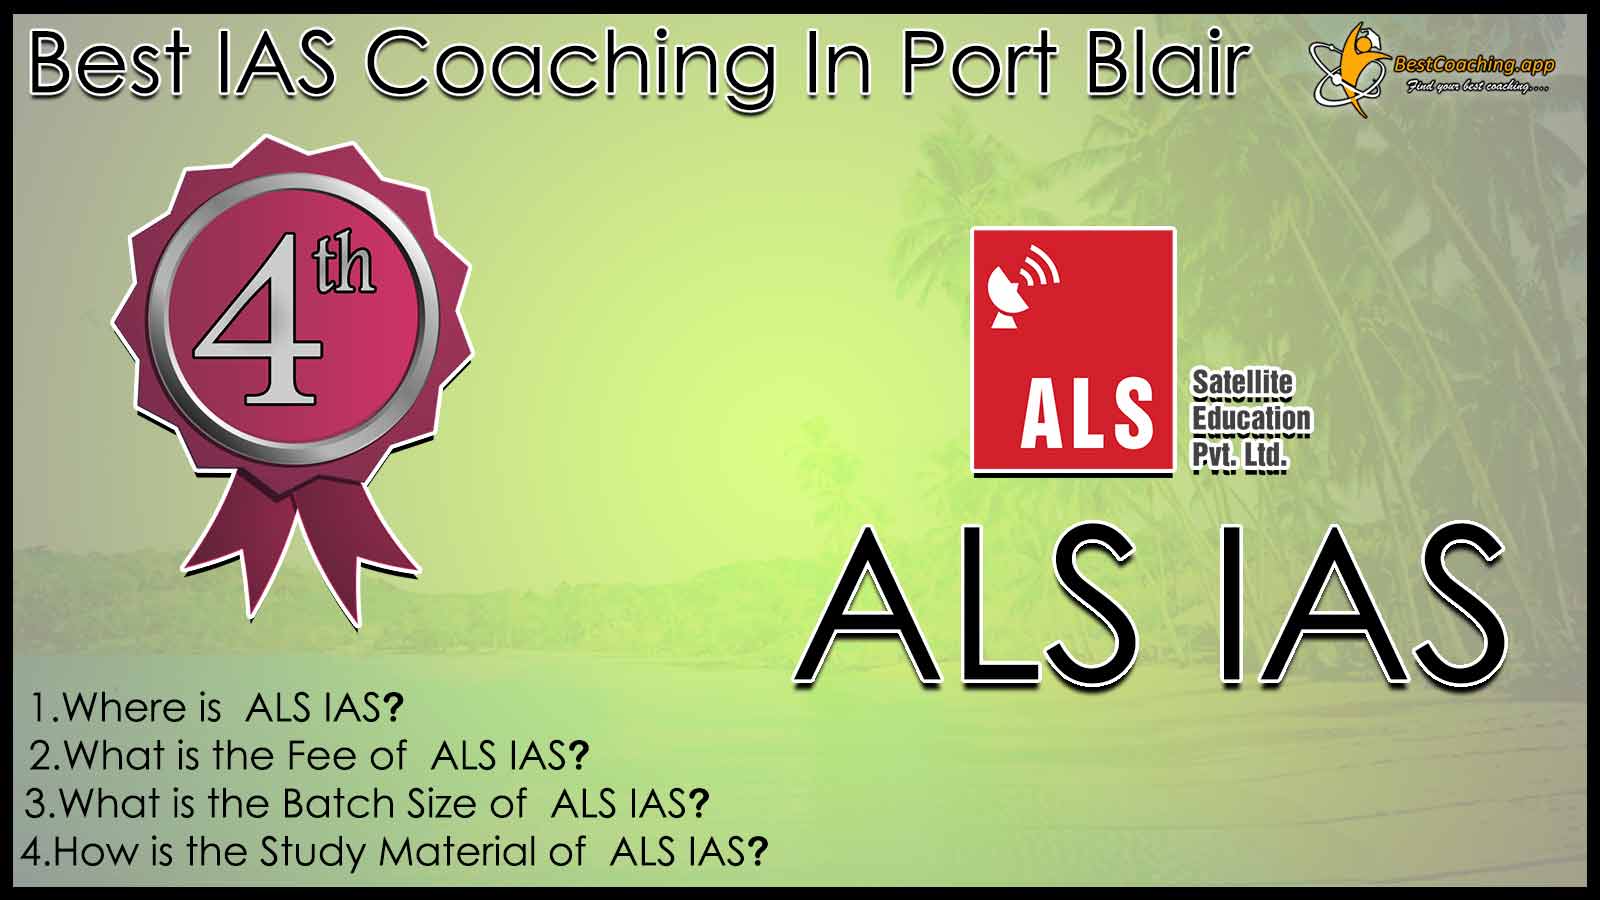 Best IAS Coaching in Port Blair